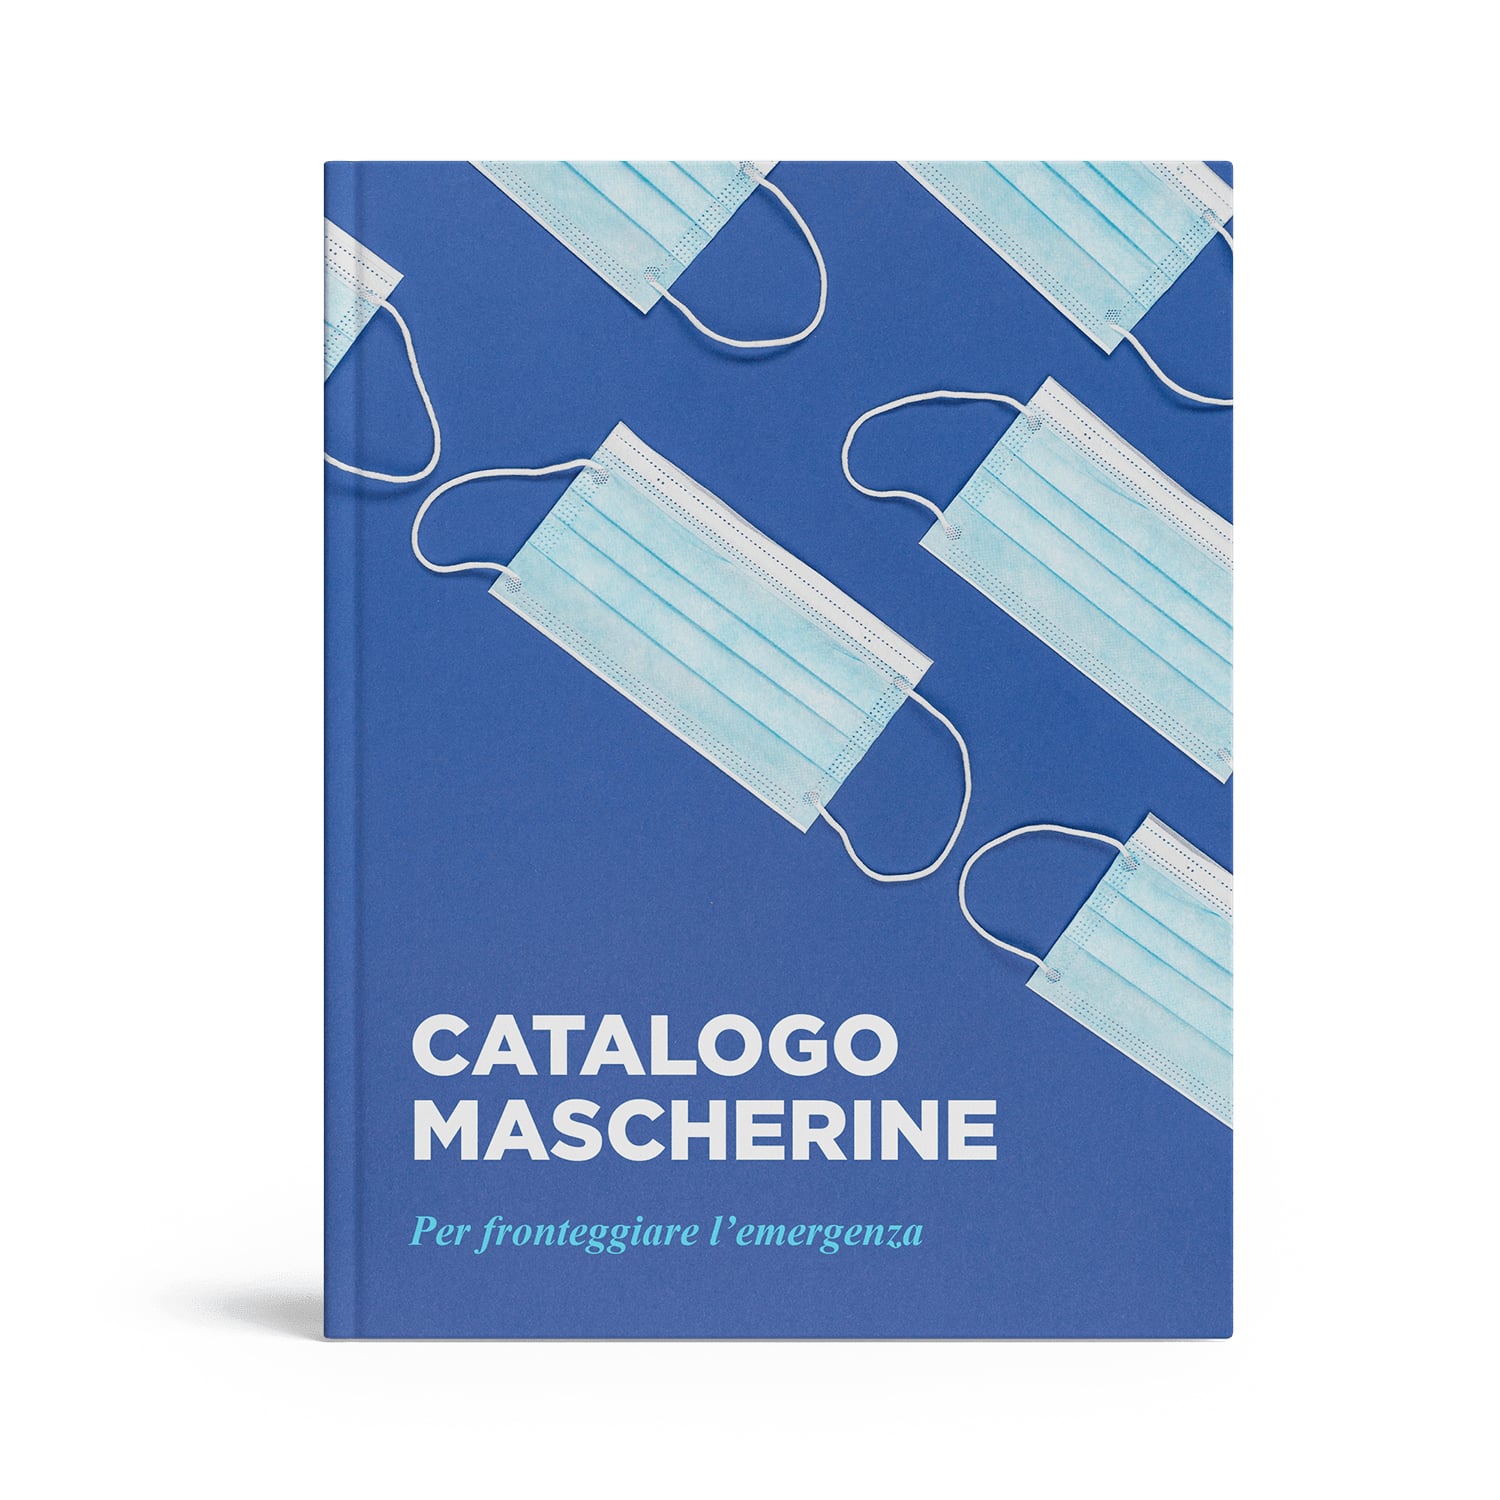 Catalogo Mascherine - Batik srl